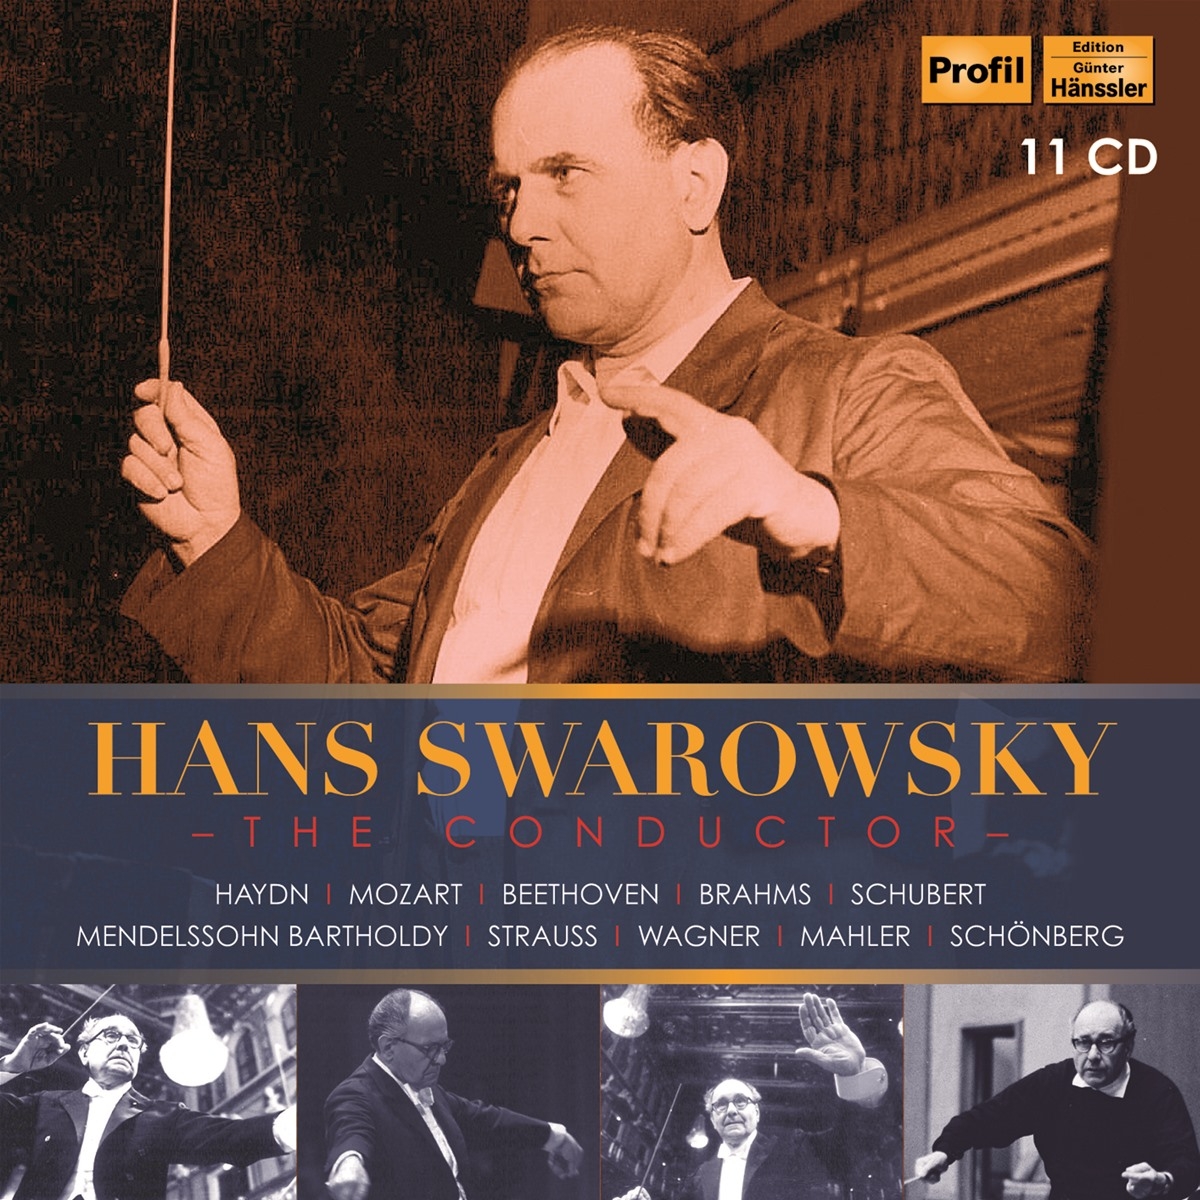 Hans Swarowsky - The Conductor